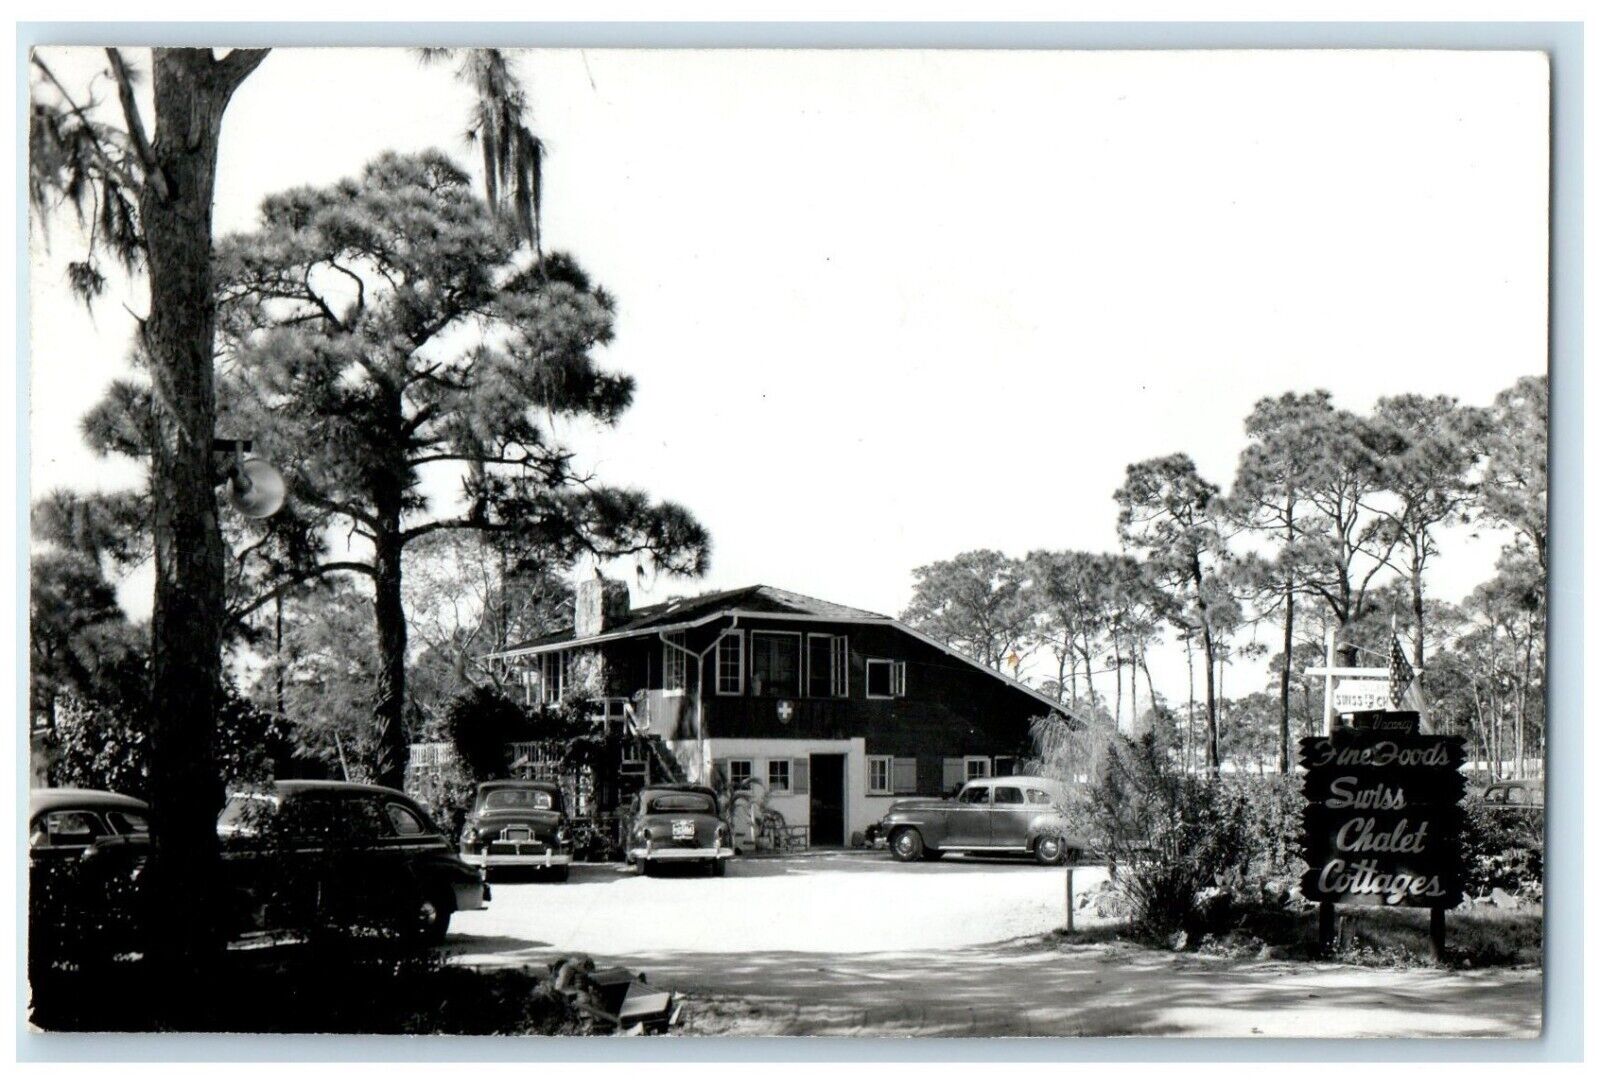 1951 Swiss Chalet Cottages Cars Sarasota Florida FL RPPC Photo Vintage Postcard